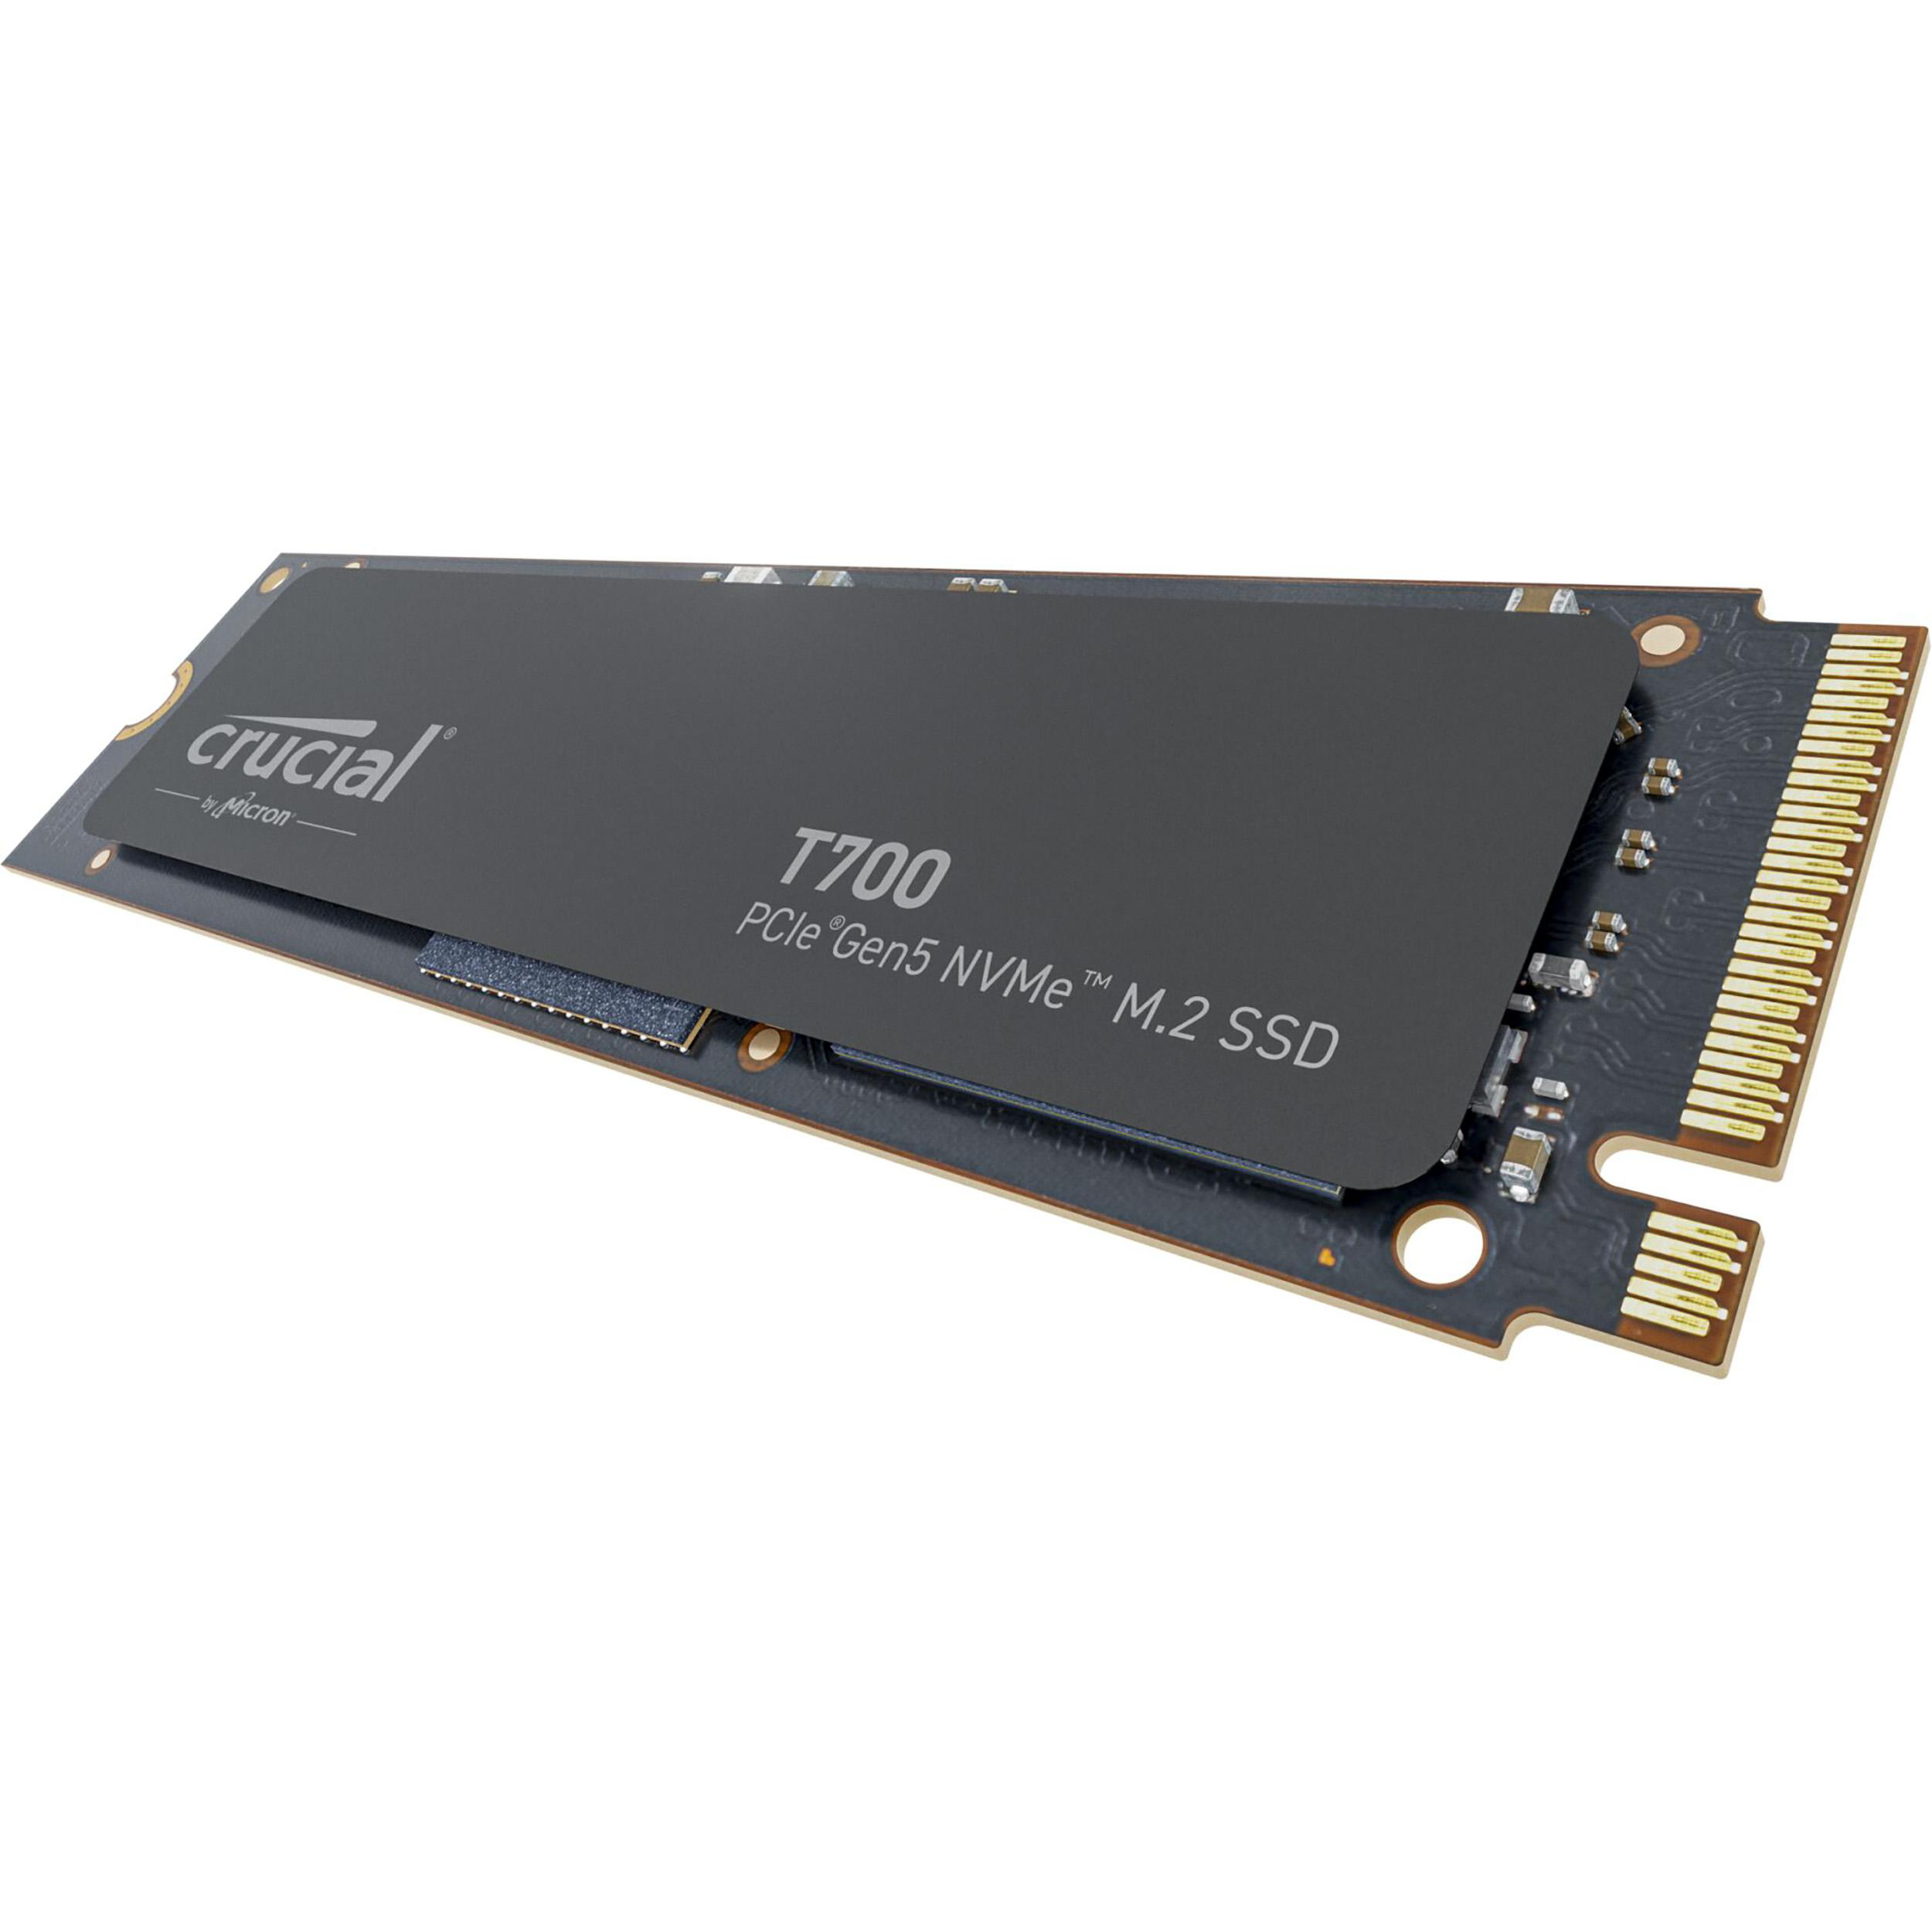 NVMe SSD, intern 2 Gen5 PCIe T700 NVMe, SSD M.2 TB via CRUCIAL